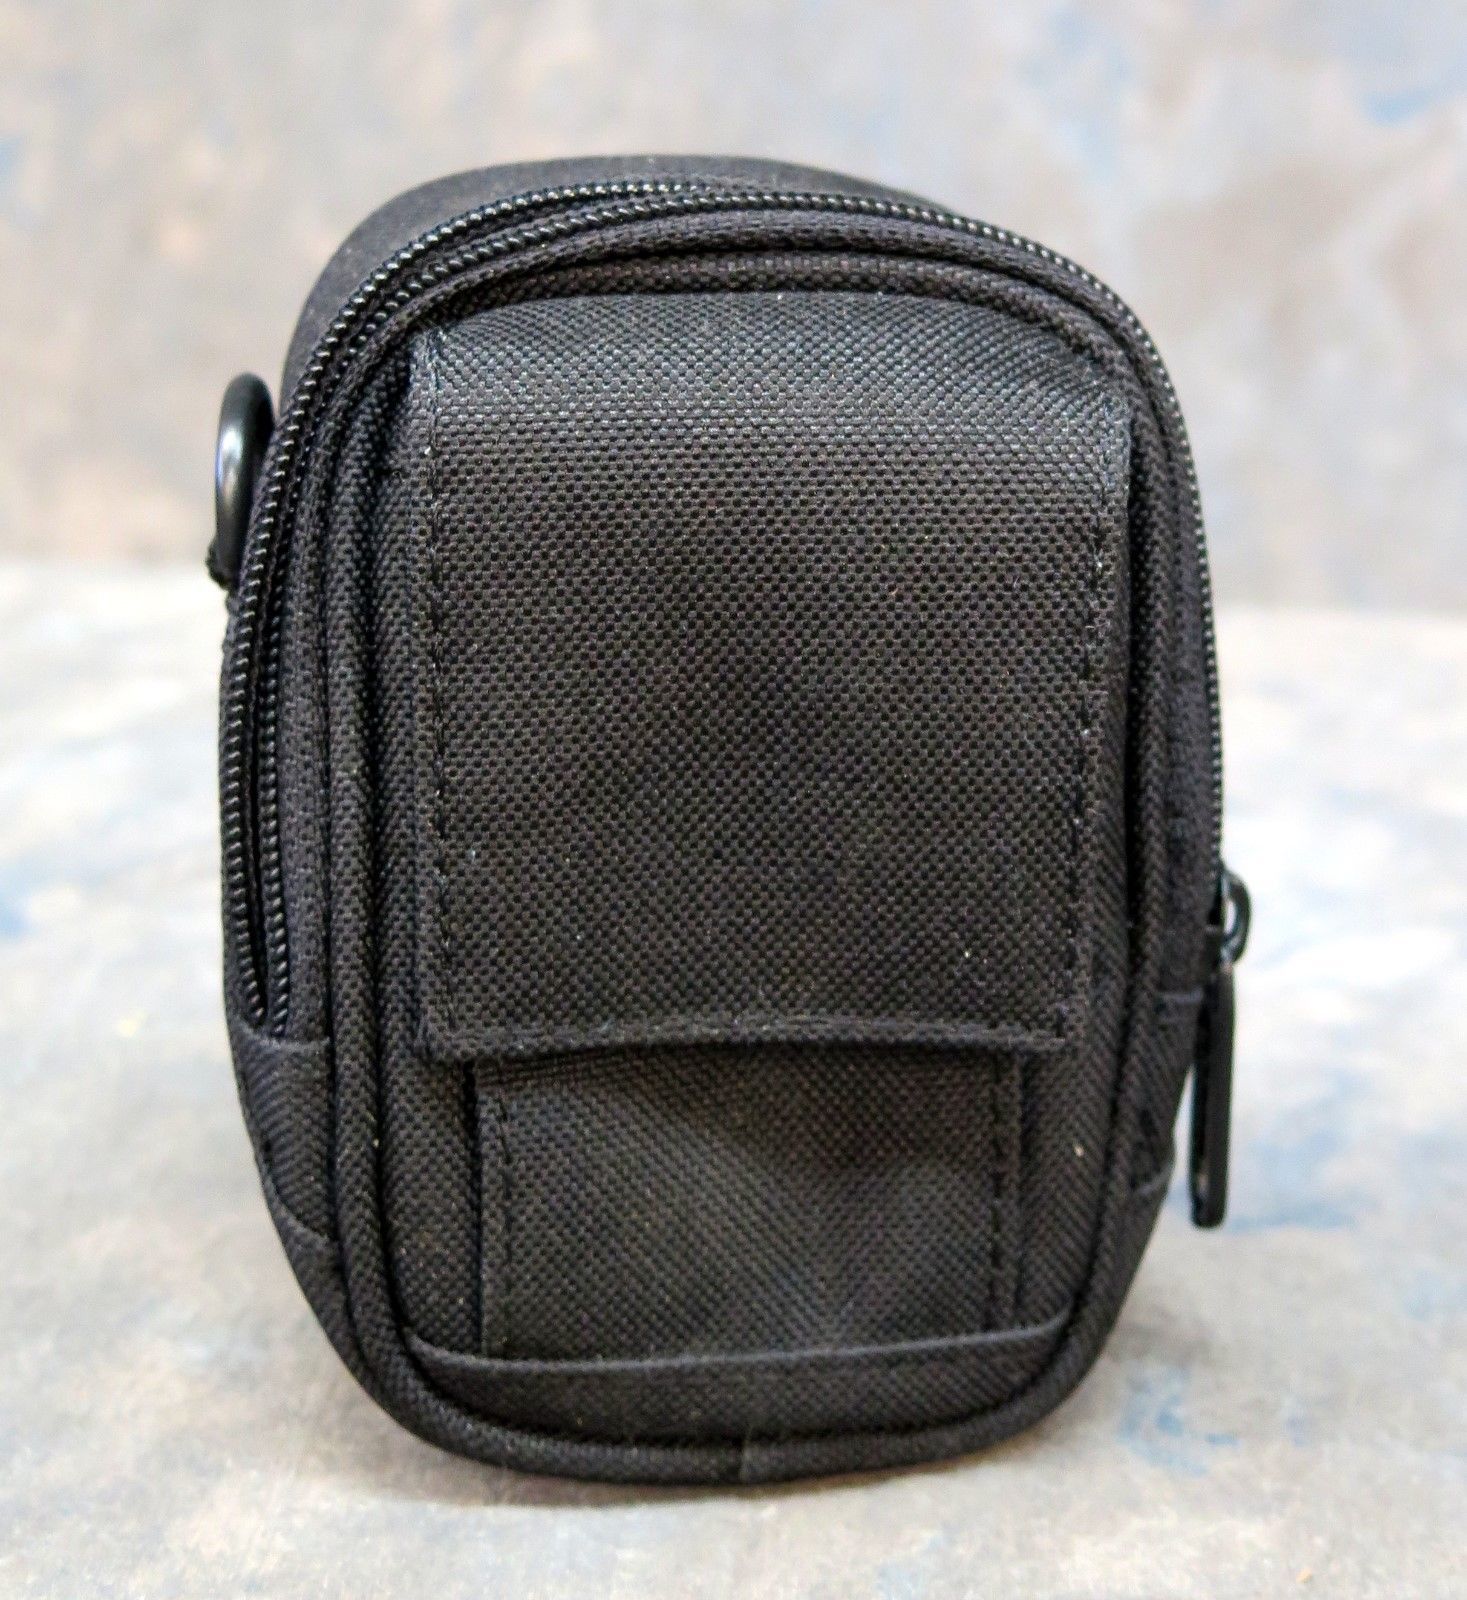 Primary image for Lowepro Small Camera Case Black